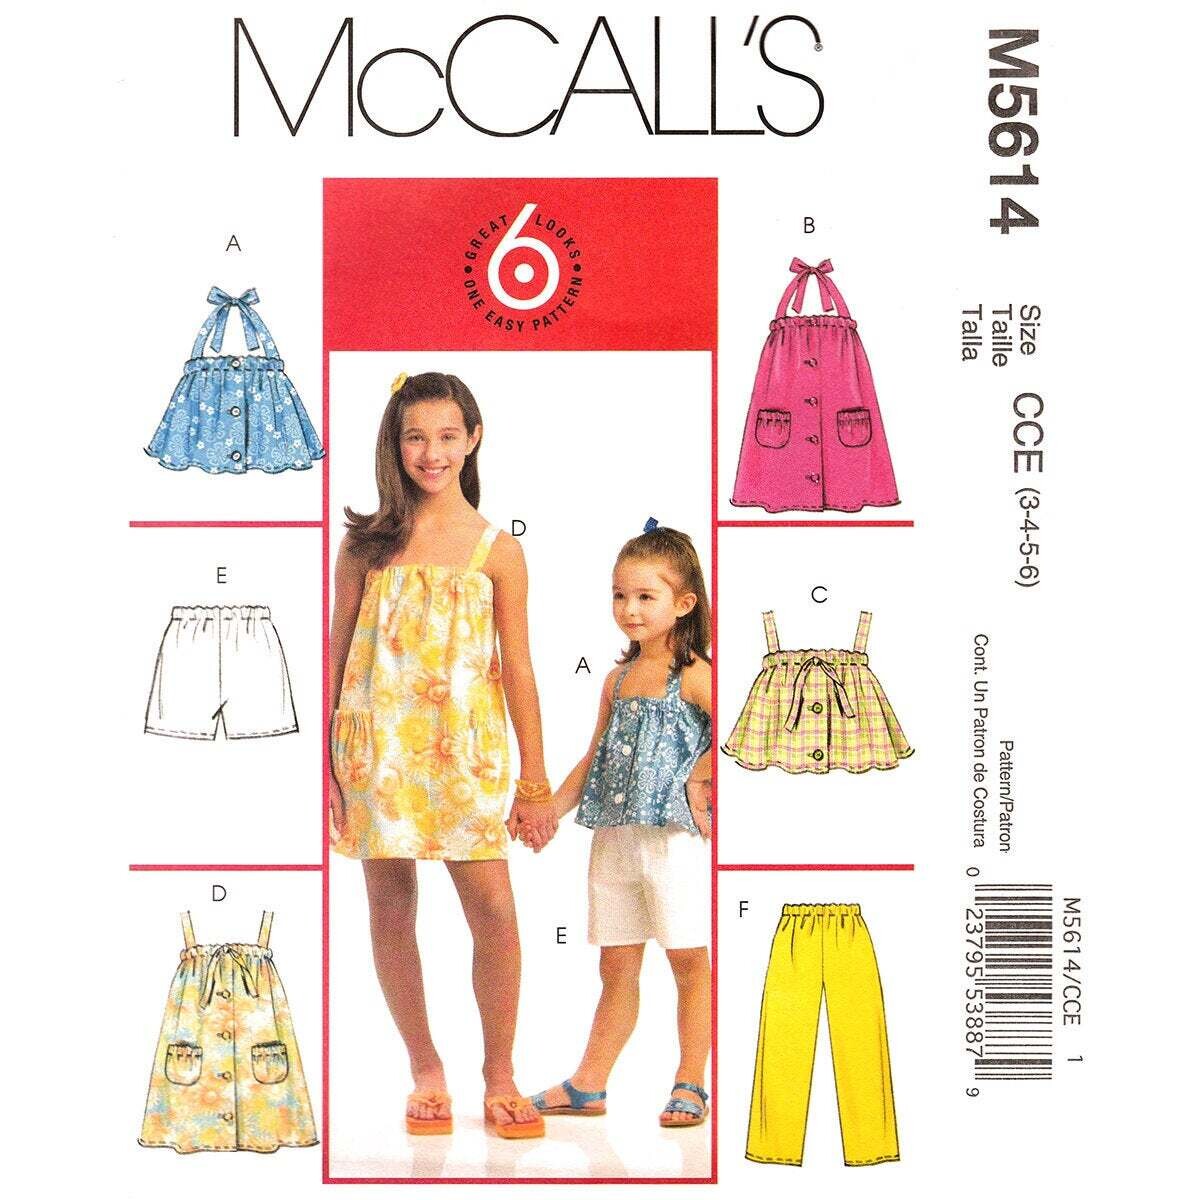 McCalls 5614 pattern